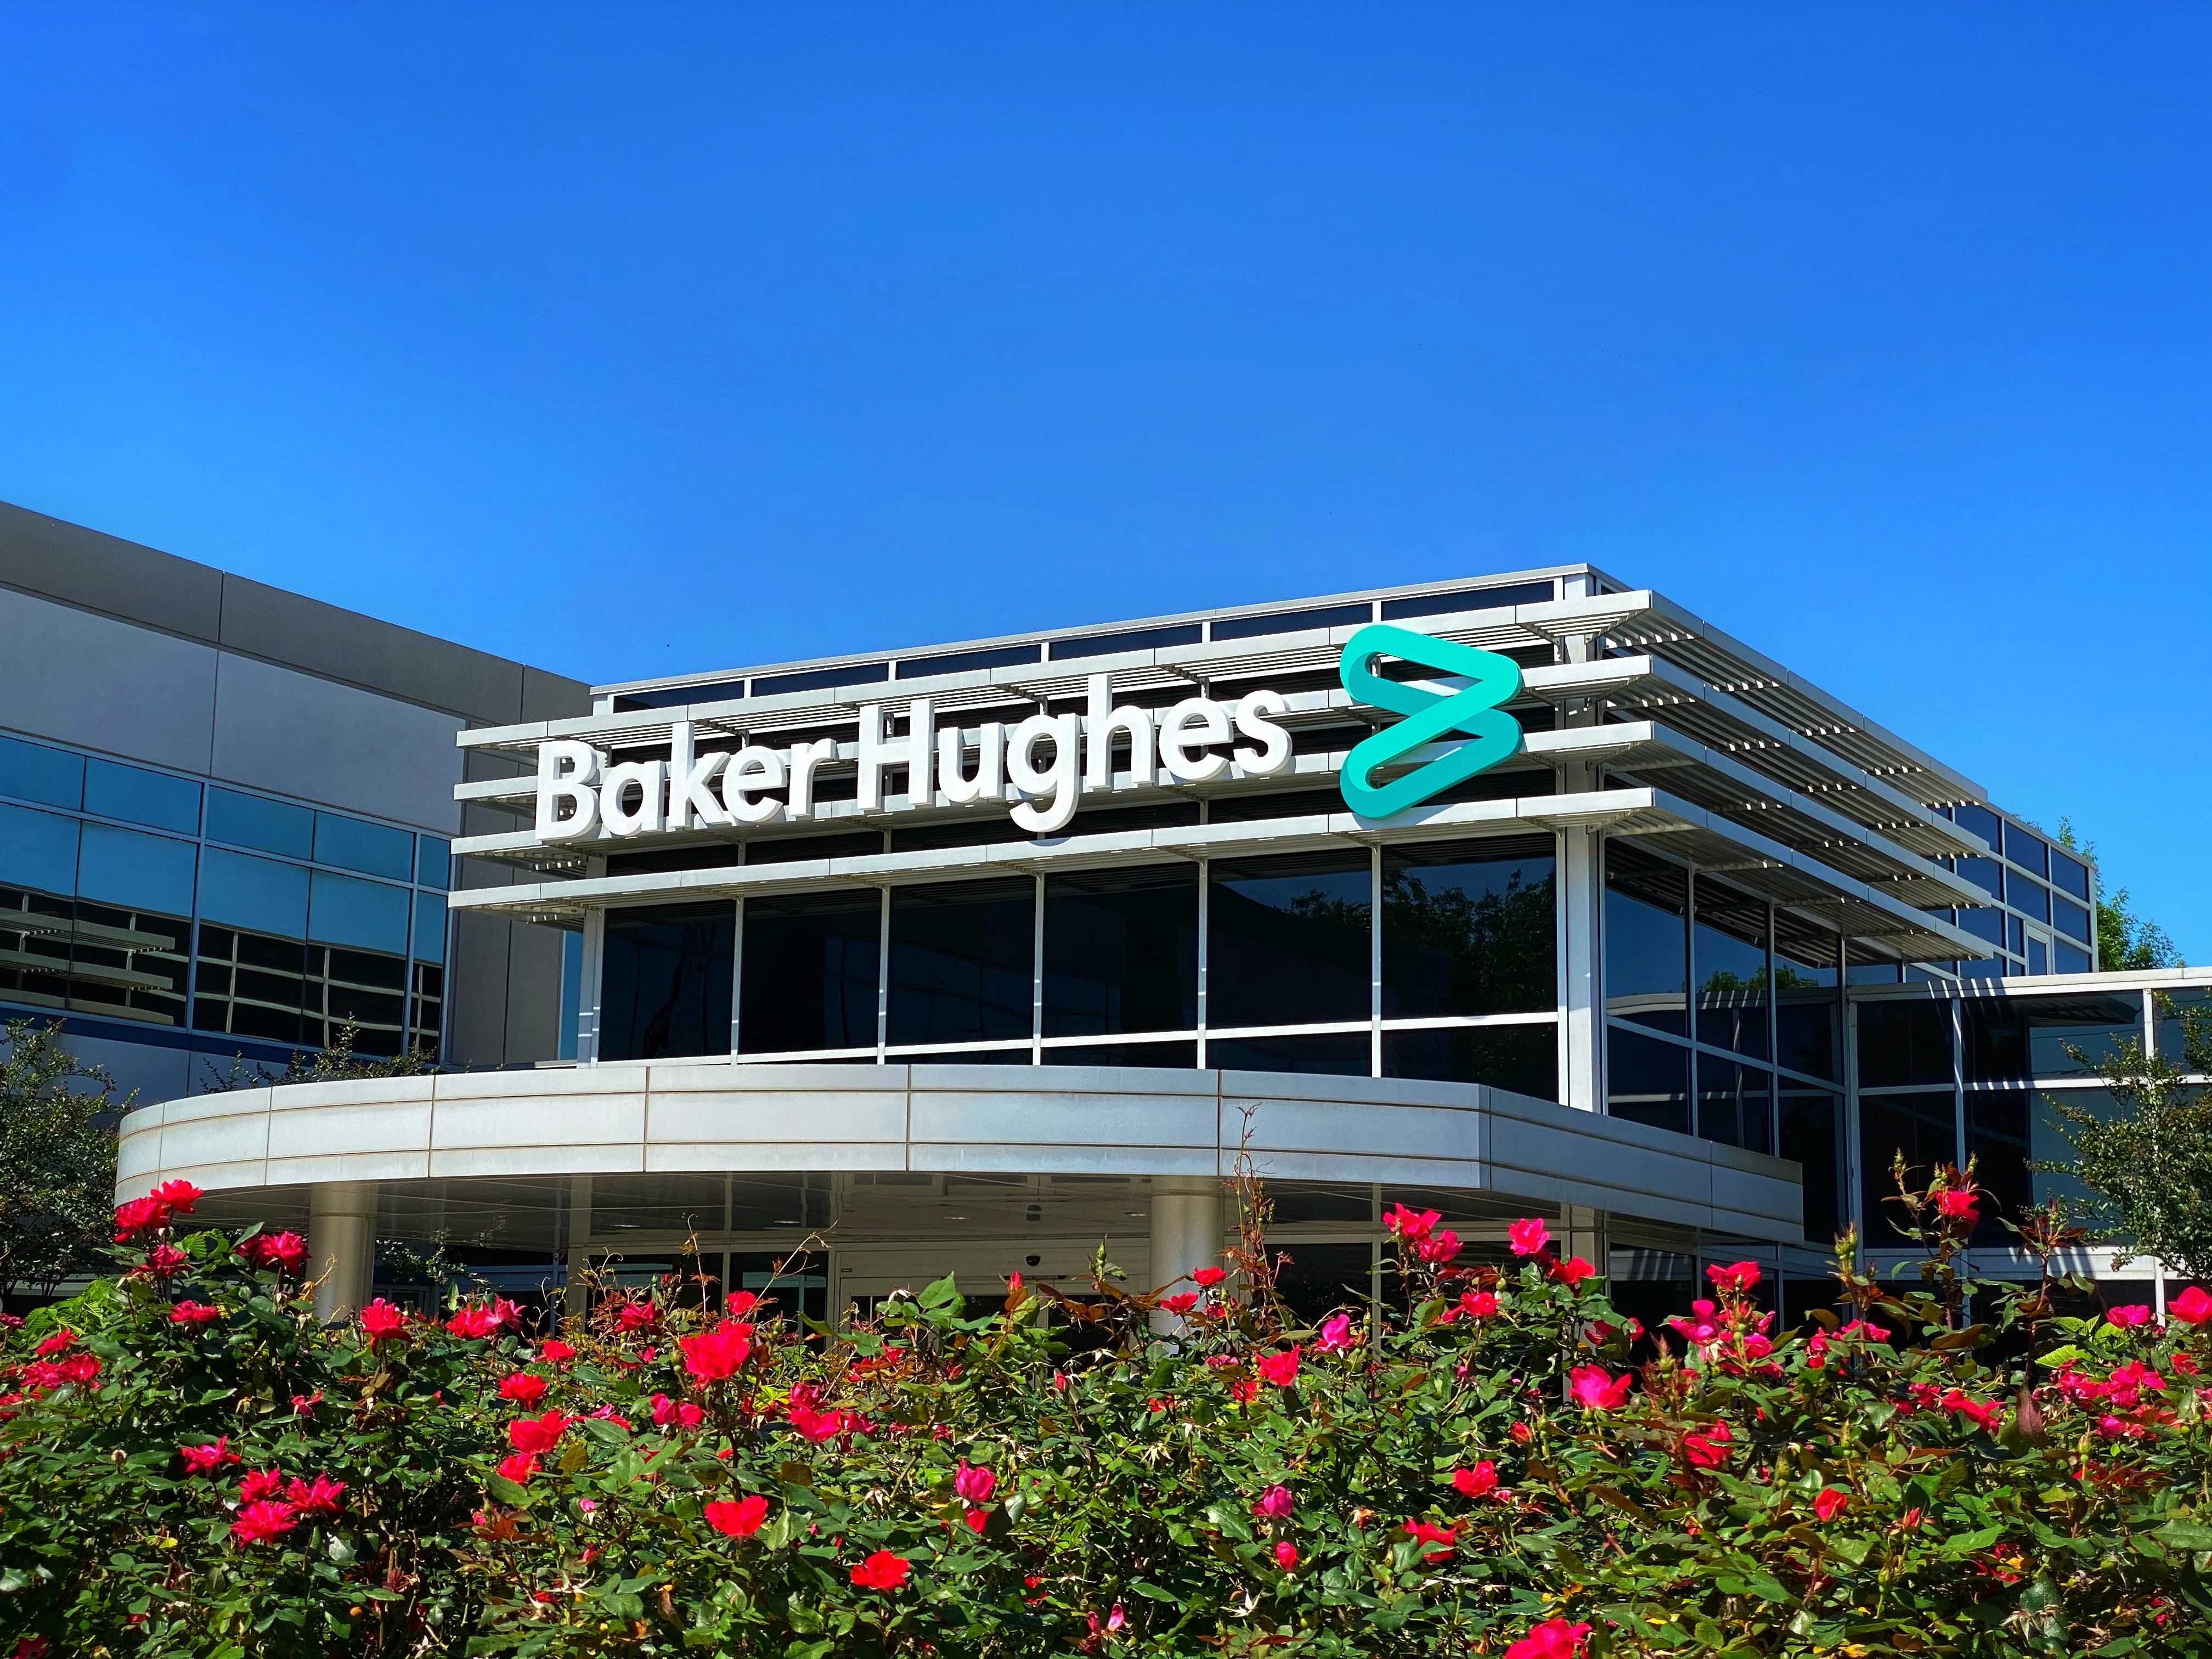 image is Baker Hughes Facility